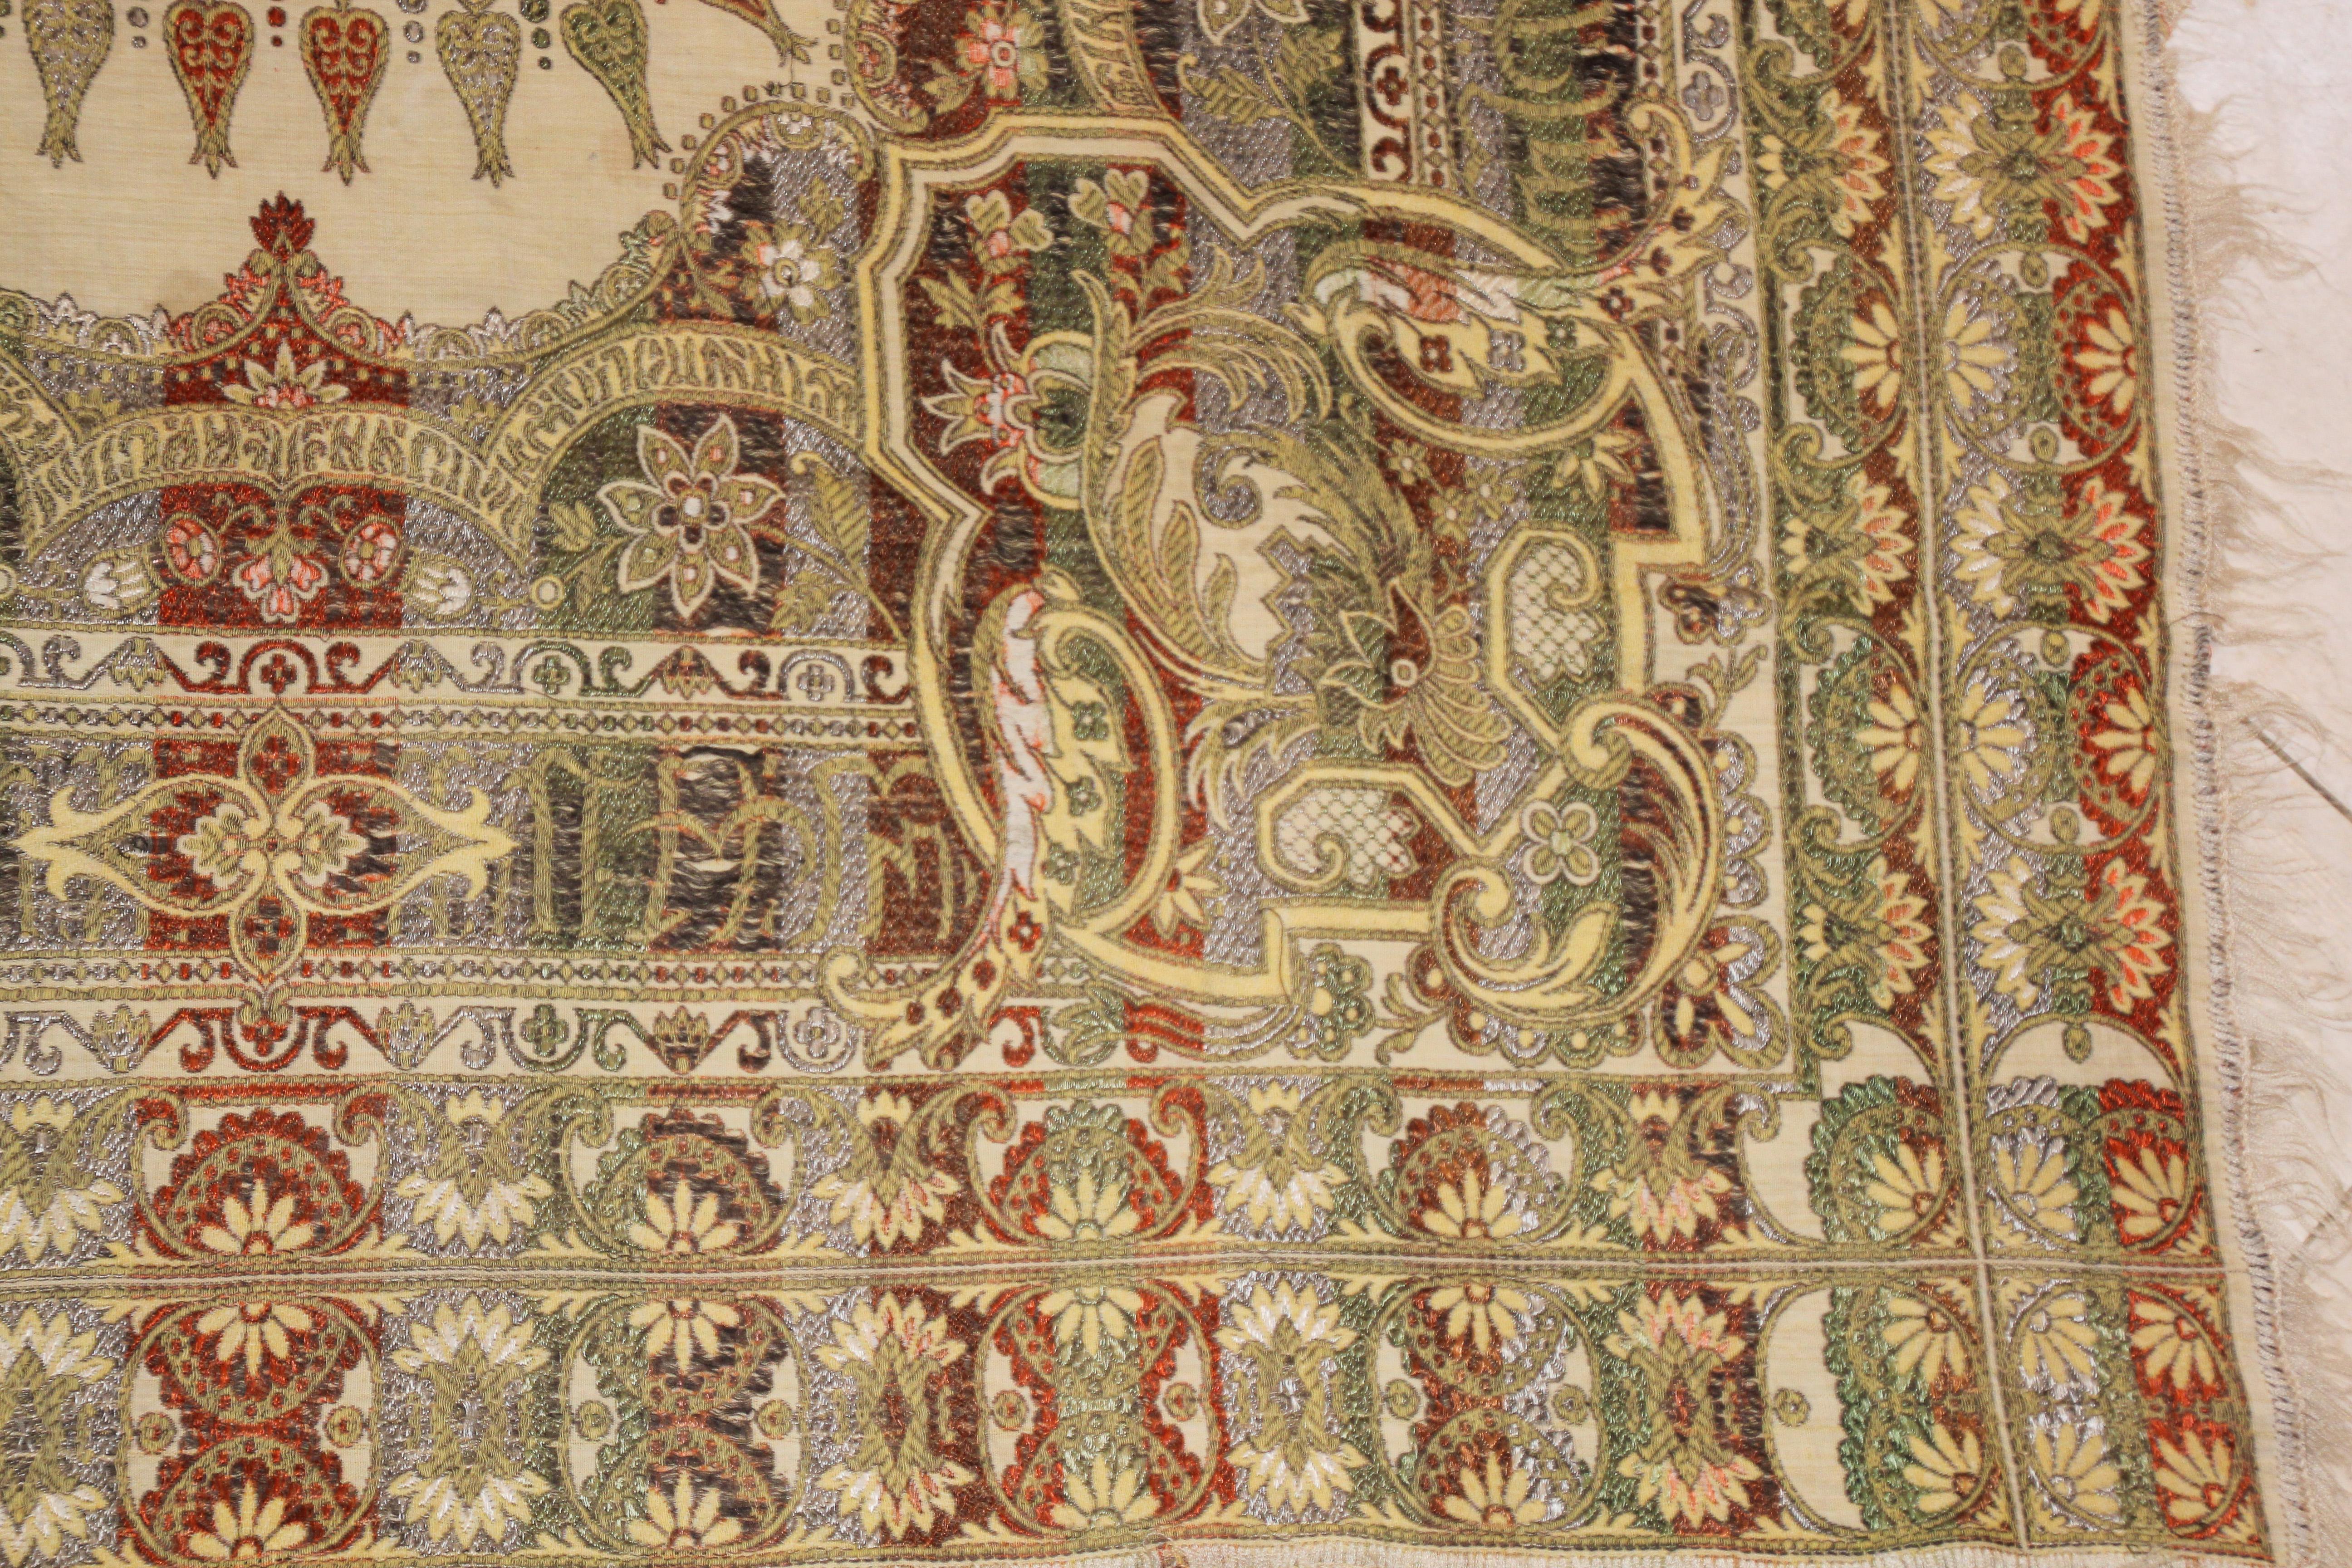 Spanish Antique Granada Moorish Textile with Arabic Calligraphy Writing